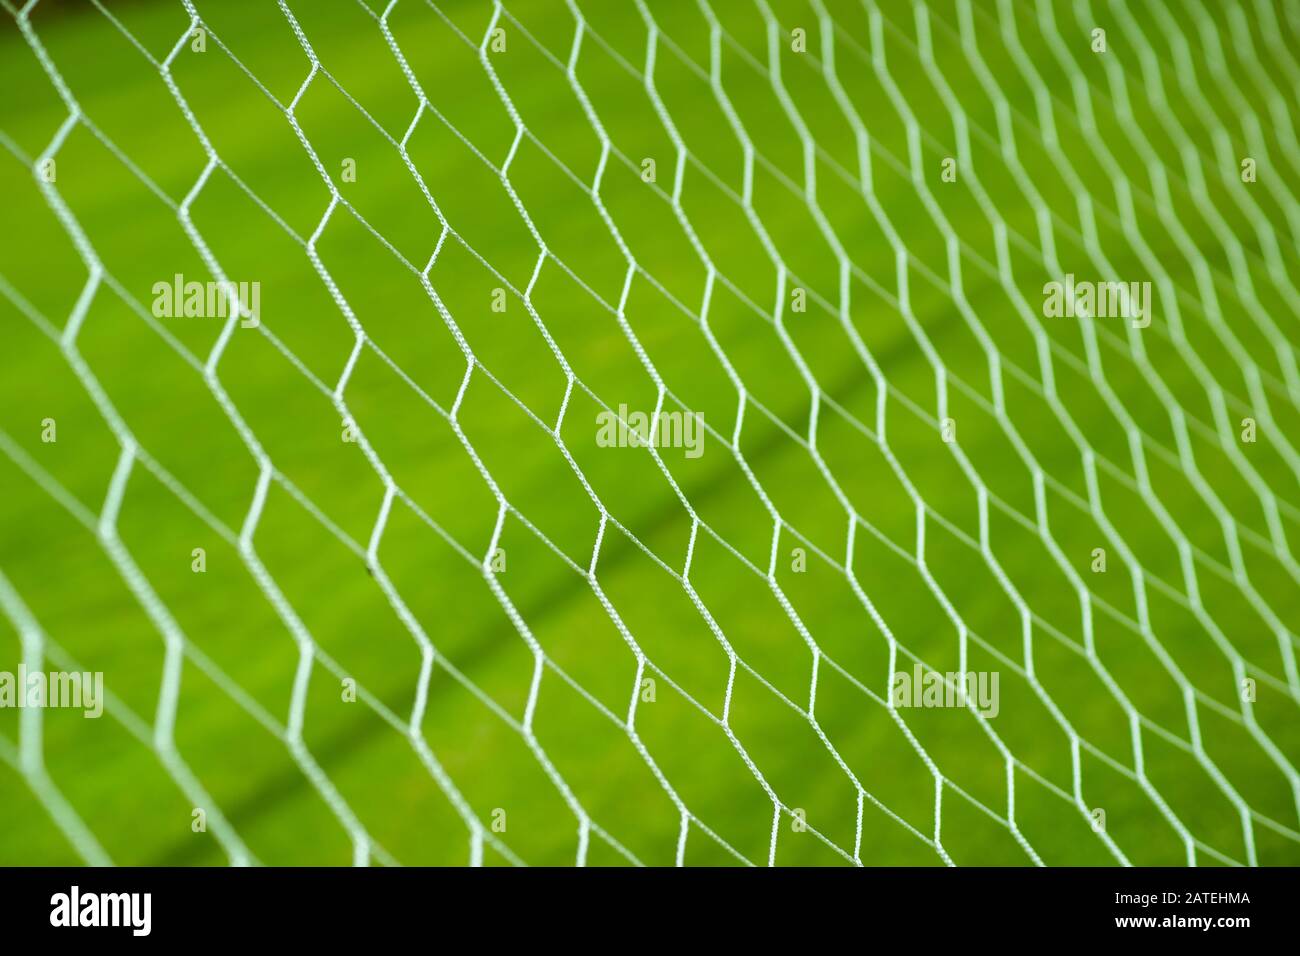 Soccer goal net on grass field Stock Photo